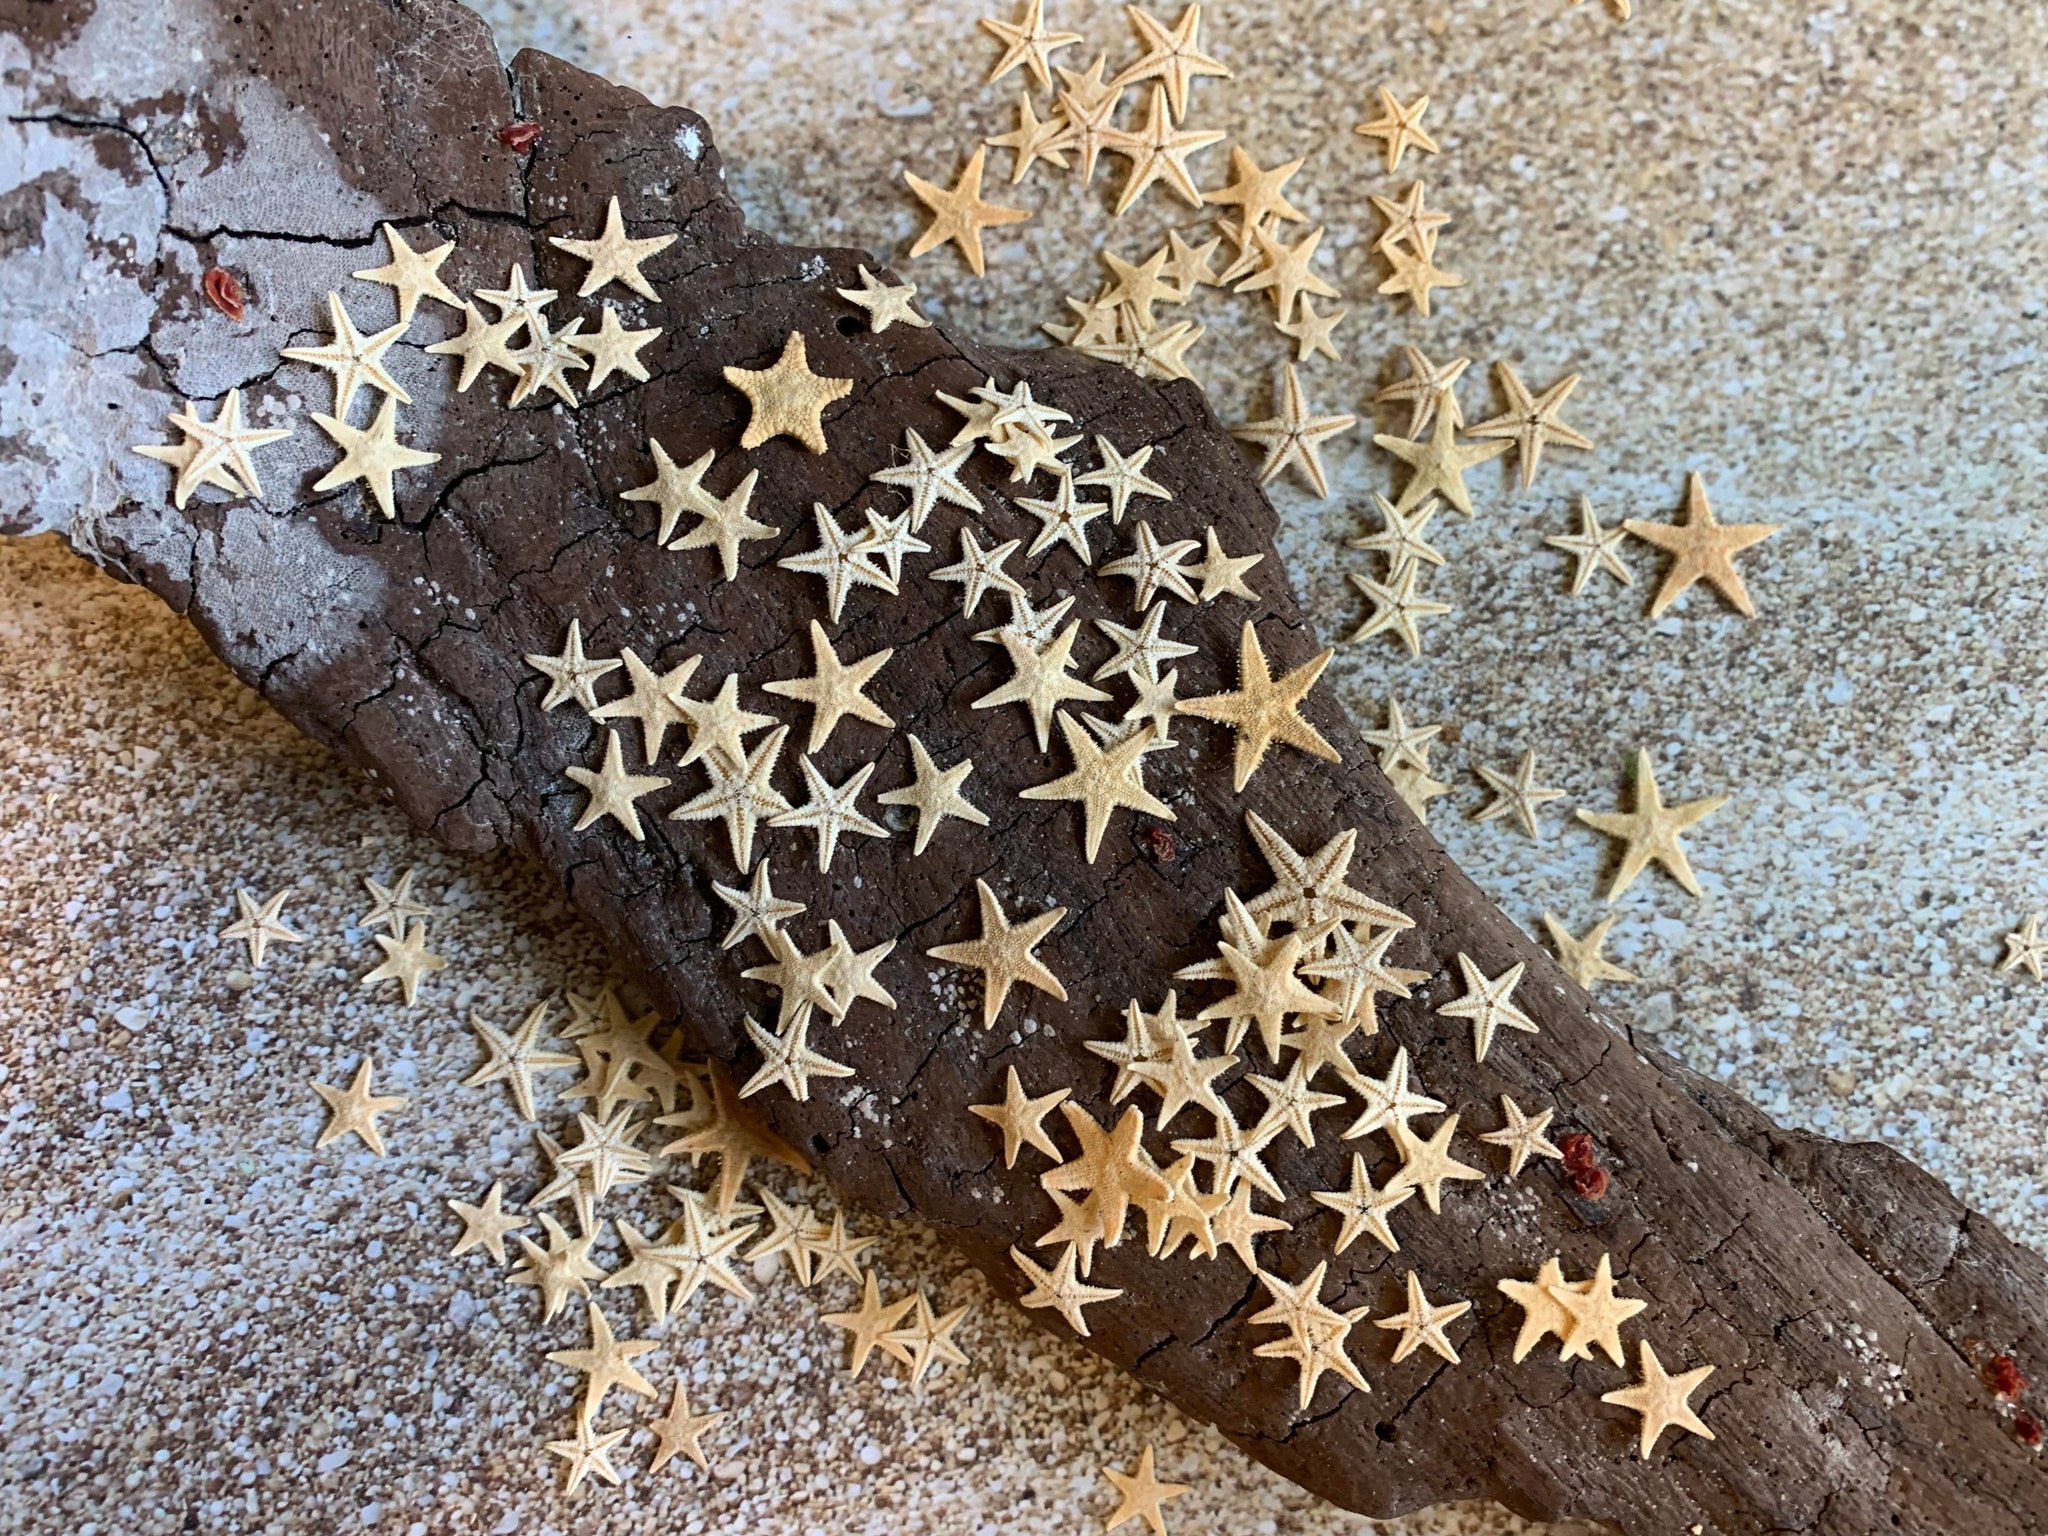  12 Extra Large Size Starfish - Tan Flat Sea Stars (3.3 - 4.3  / 85-110 mm), Beach Crafts, Wedding Invitations : Home & Kitchen